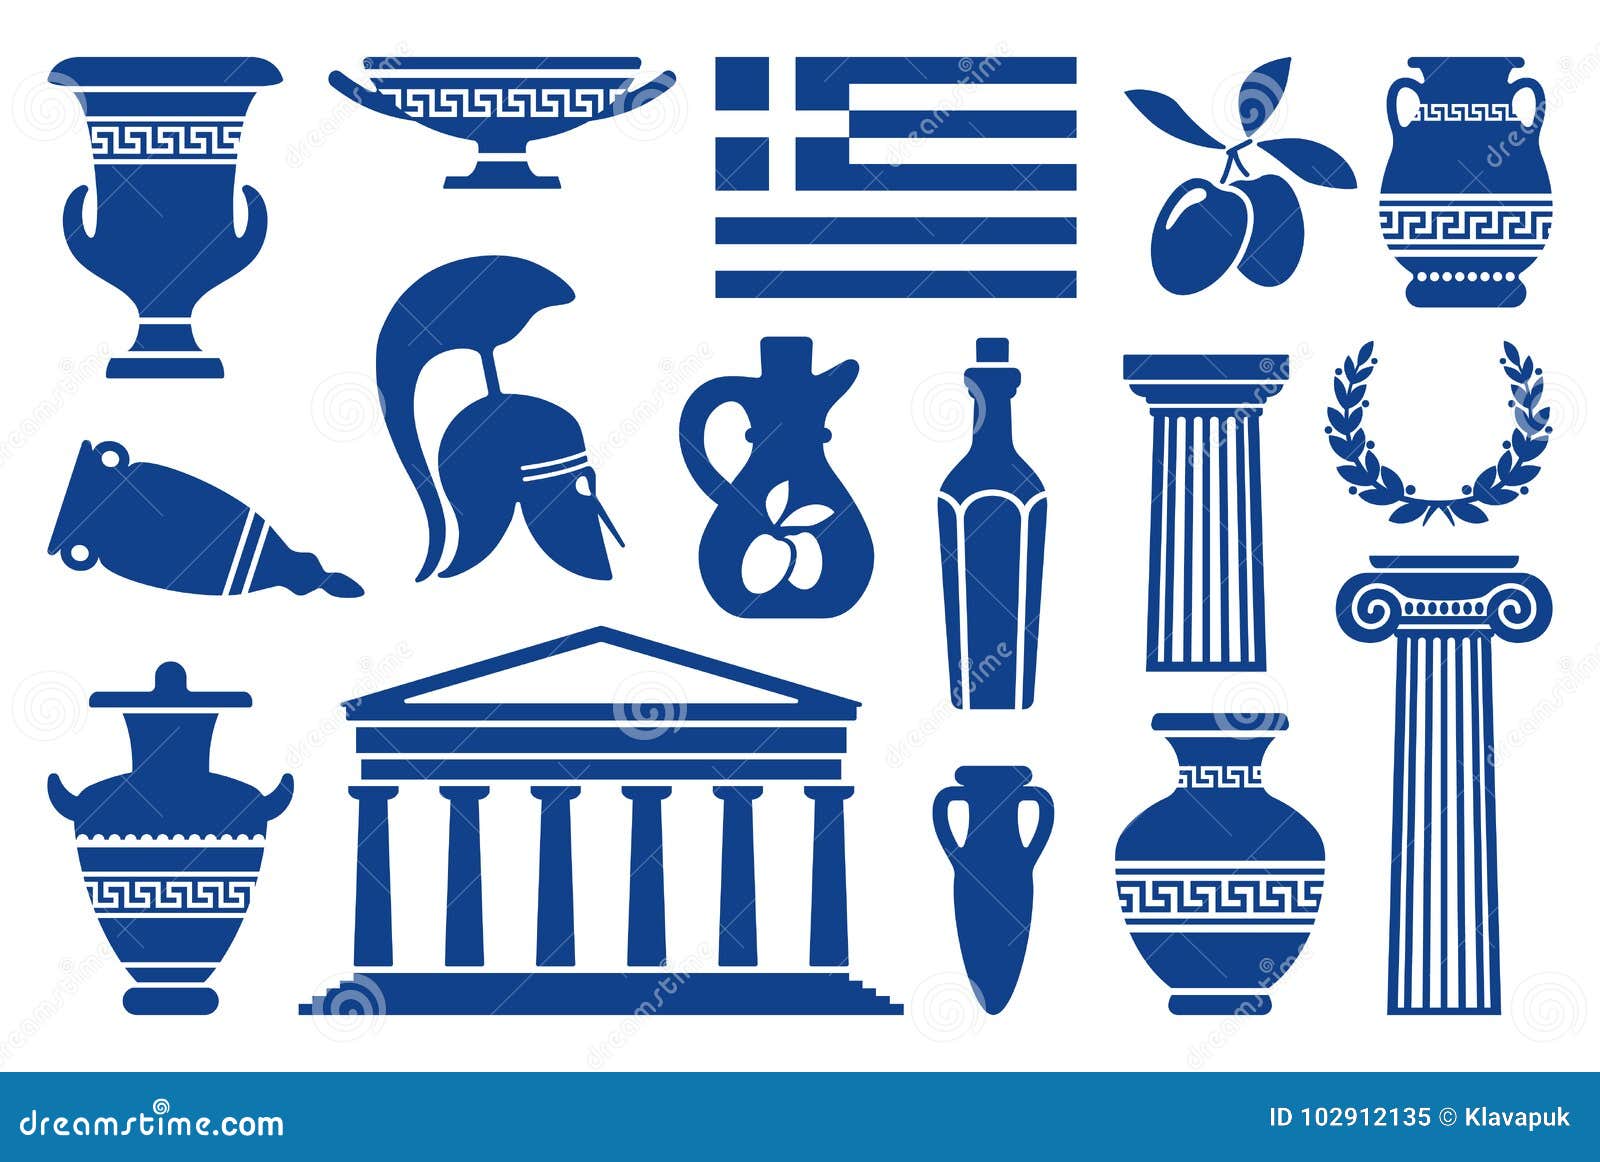 symbole de la grece